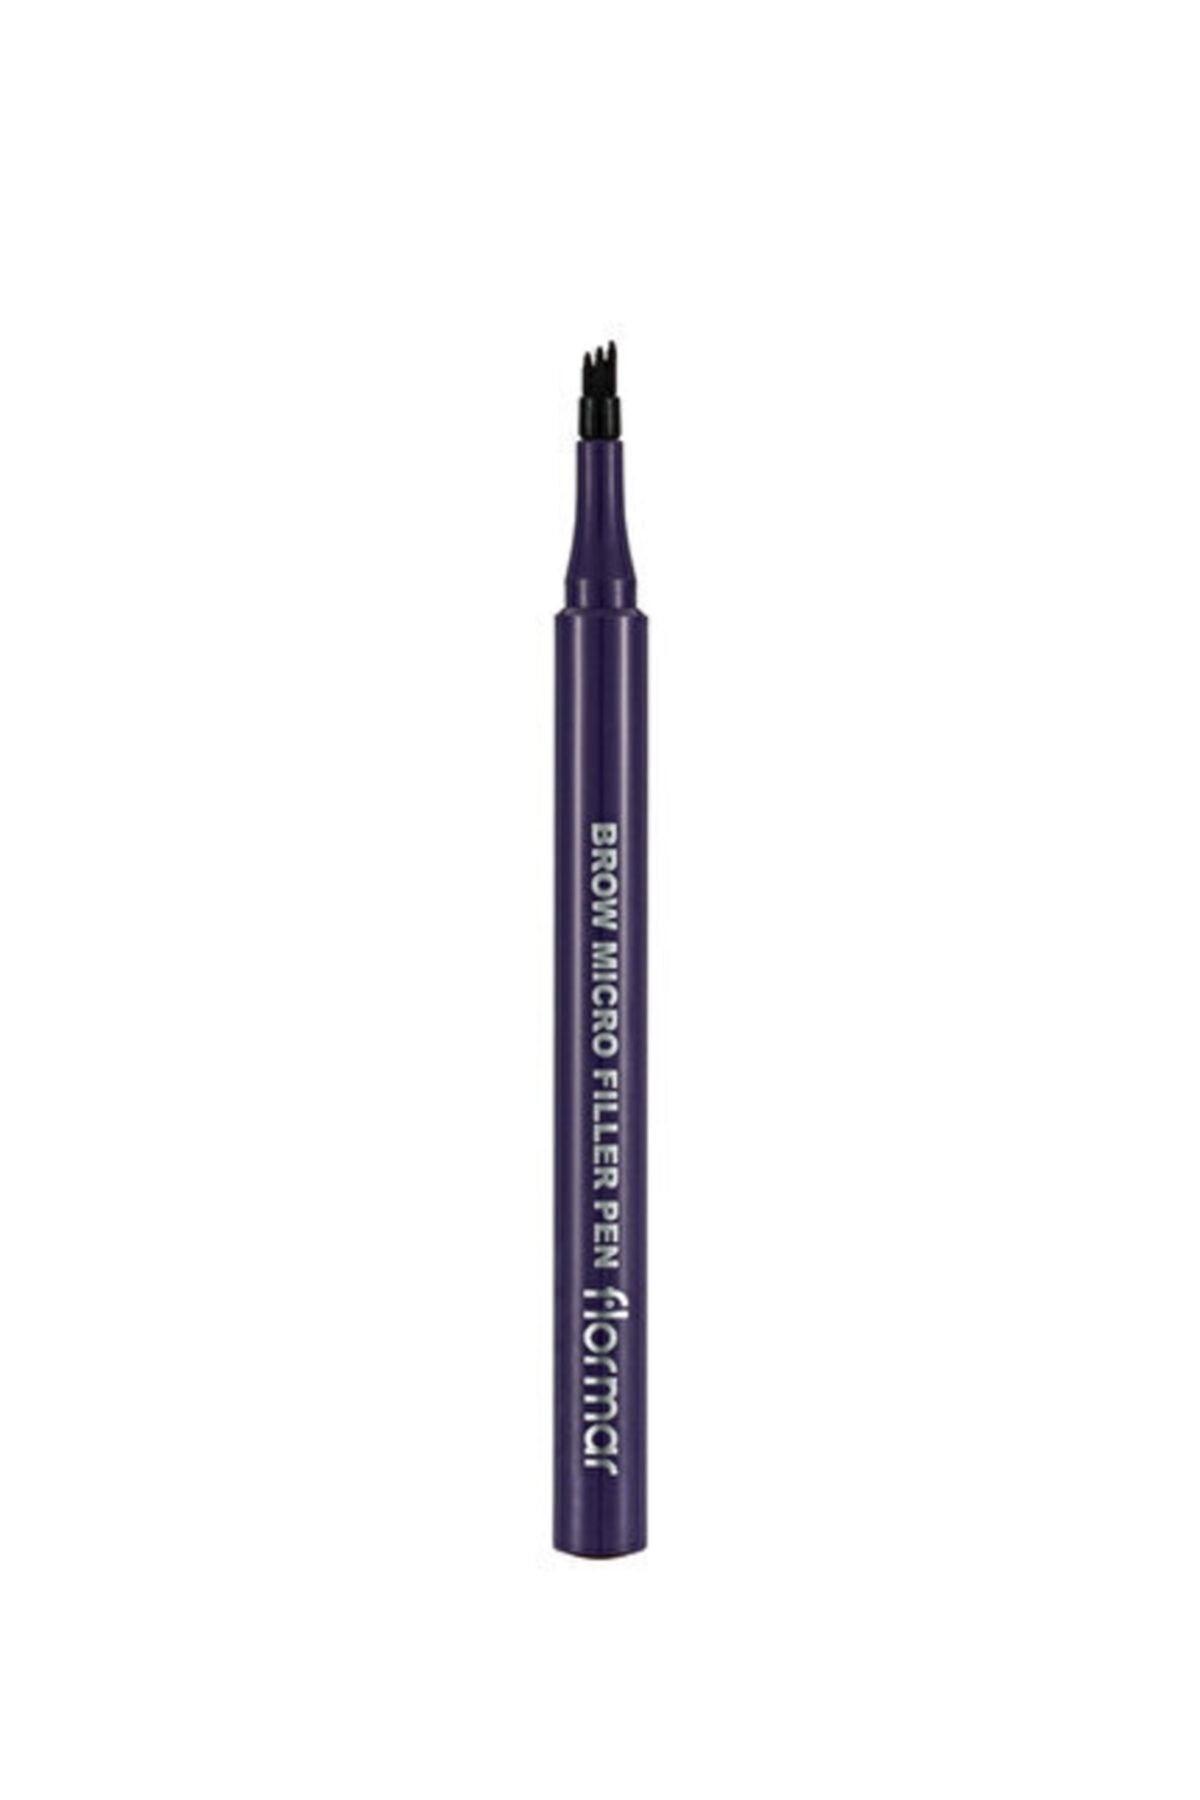 Flormar قلم پر کننده ابرو با نوک فلزی رنگ ابرو 002 متوسط قهوه ای